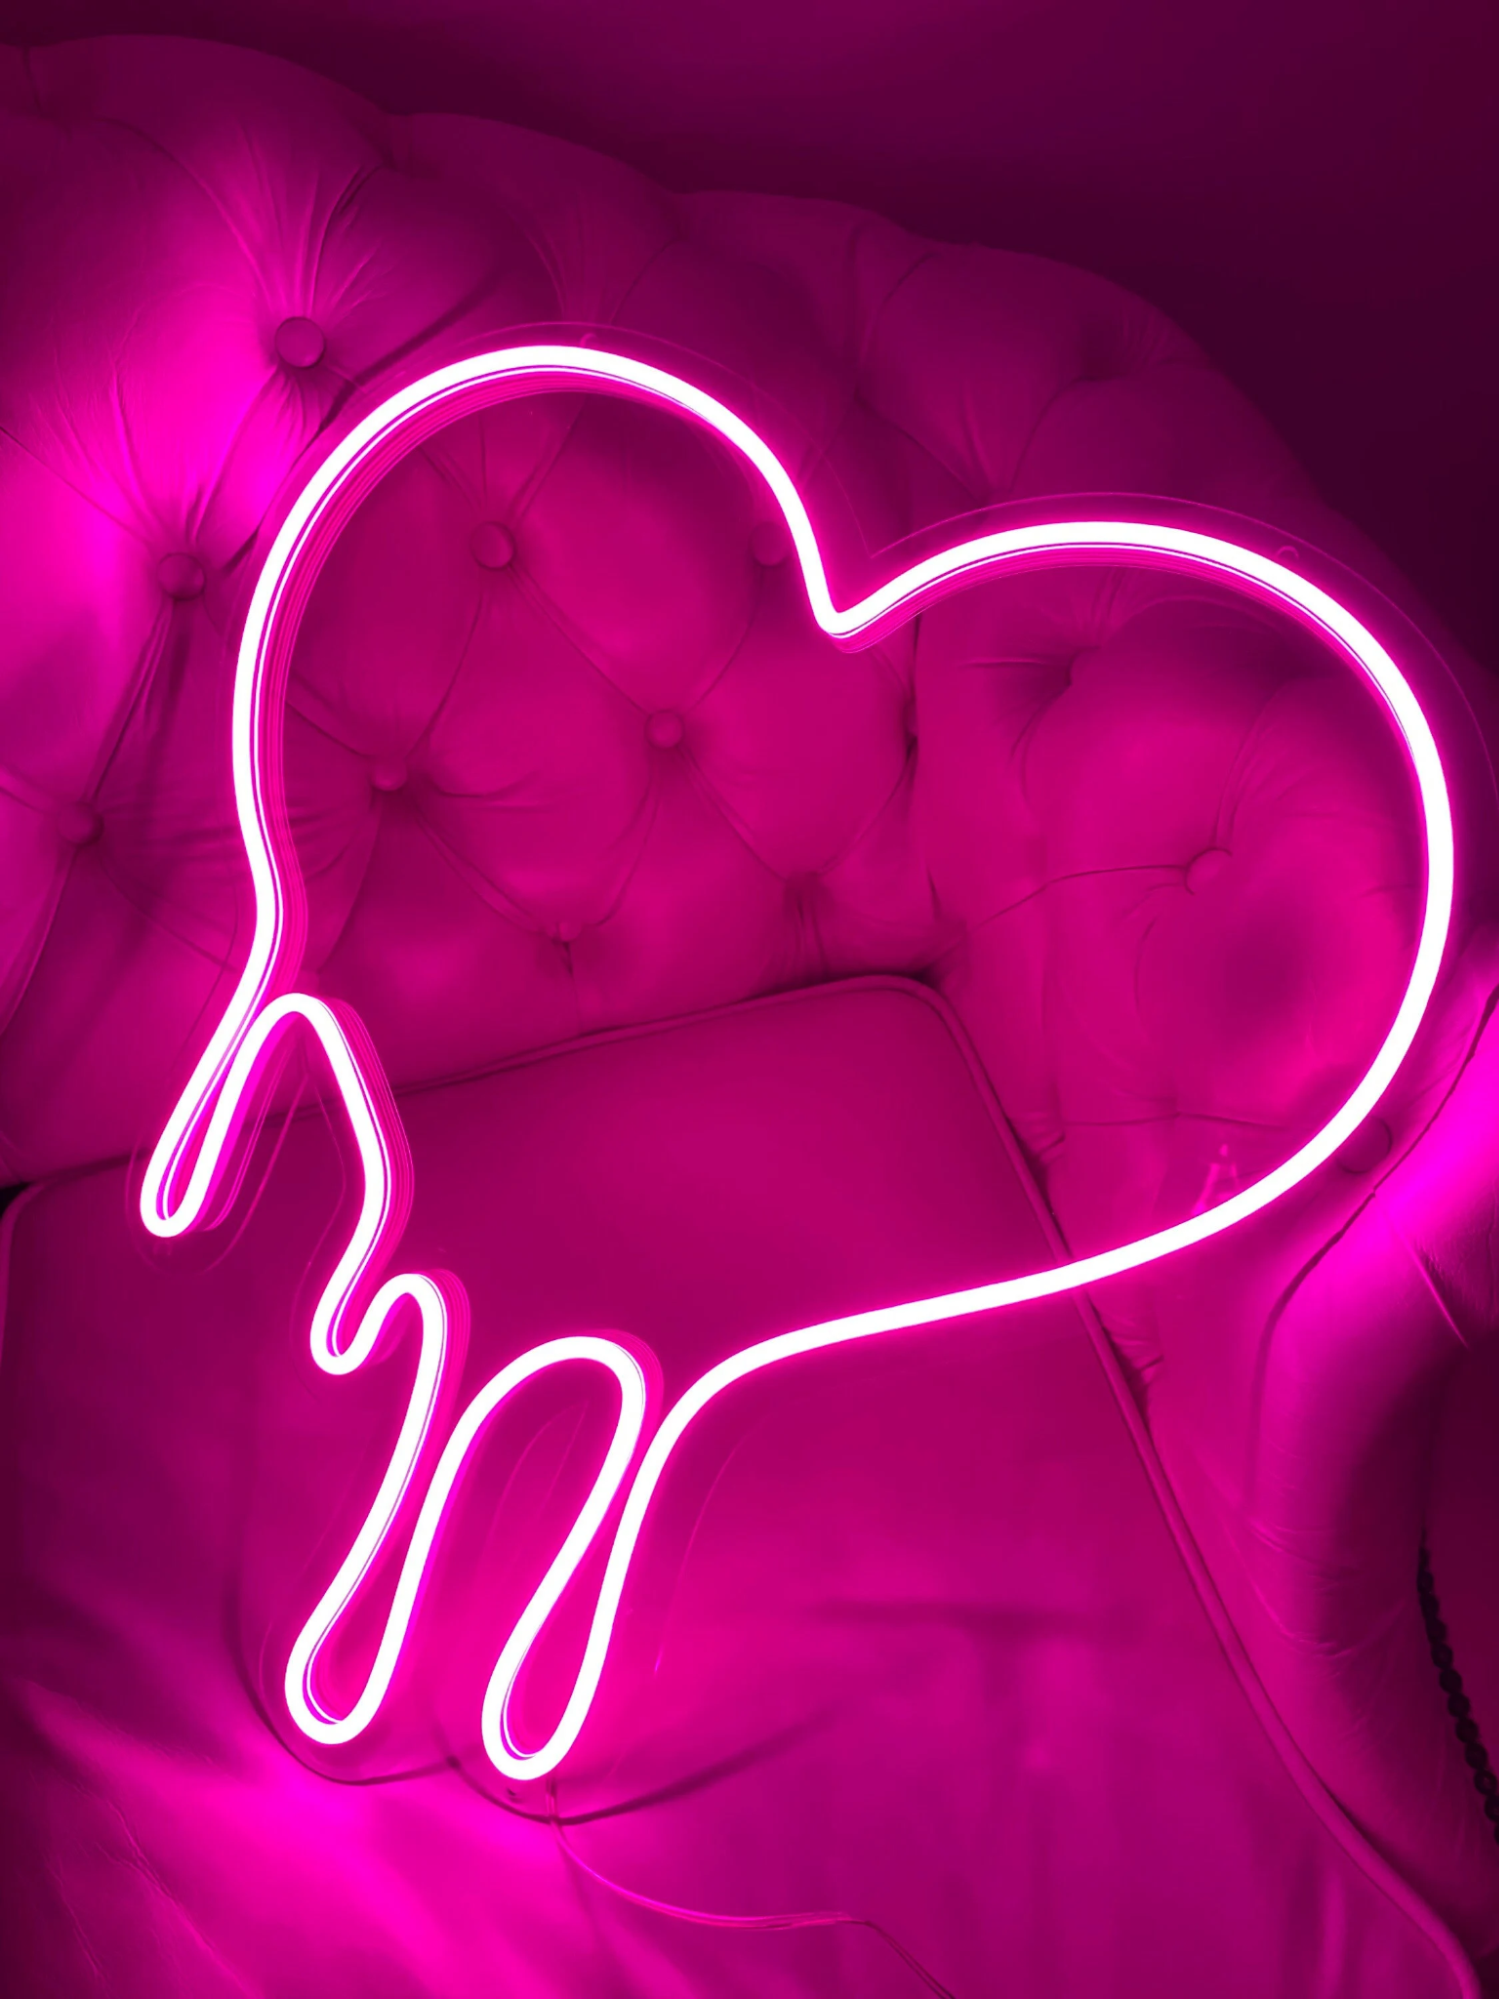 LED heart neon sign